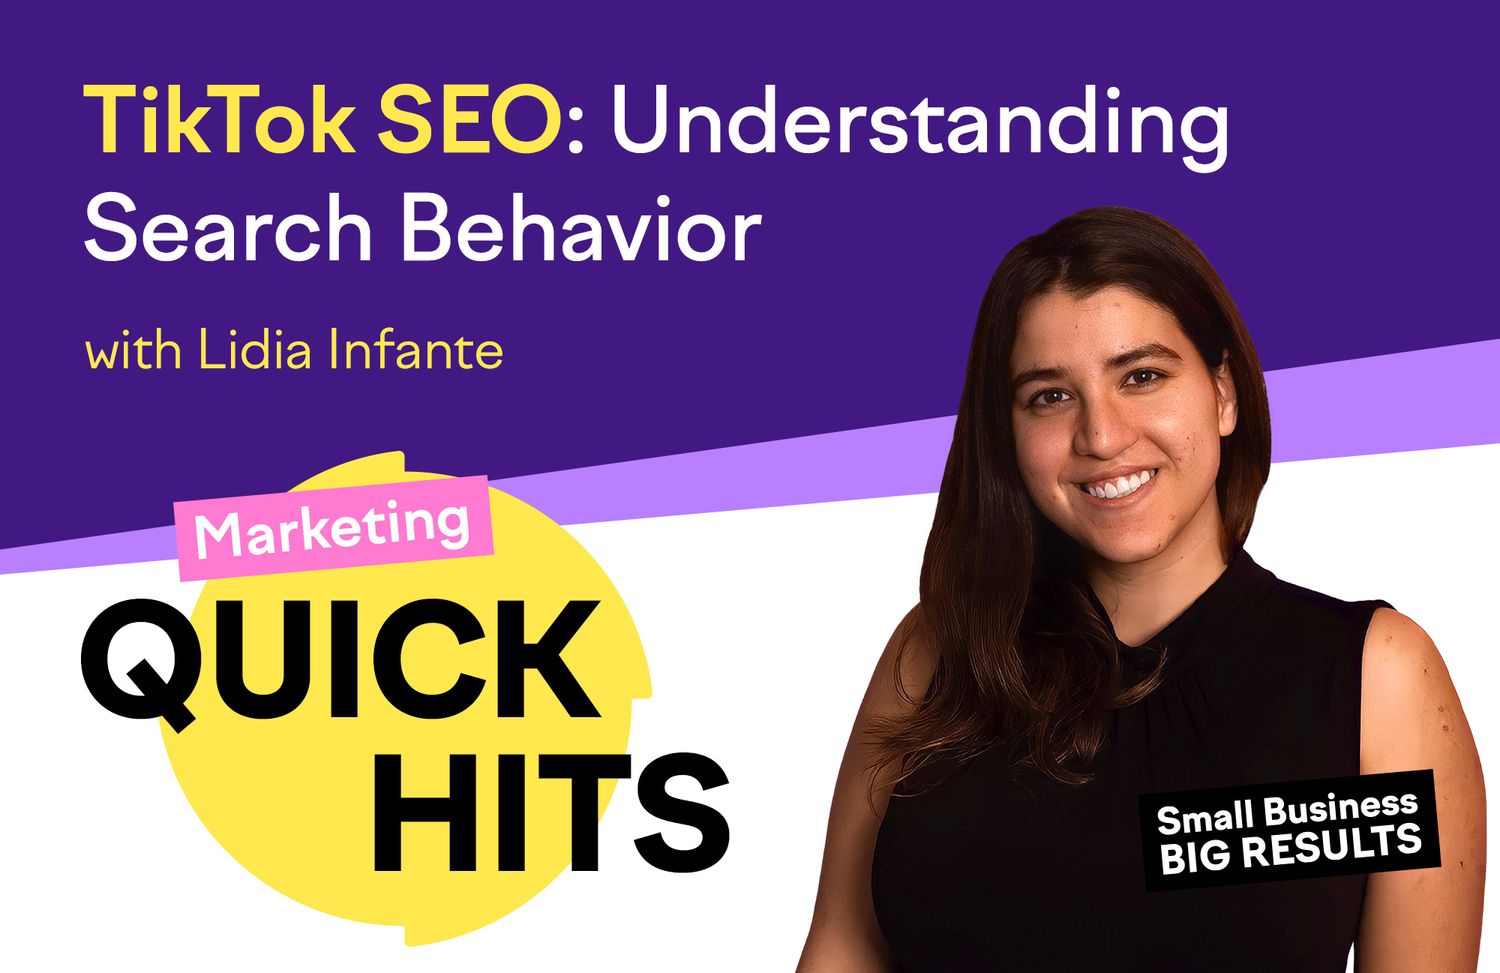 TikTok SEO: Understanding Search Behavior with Lidia Infante